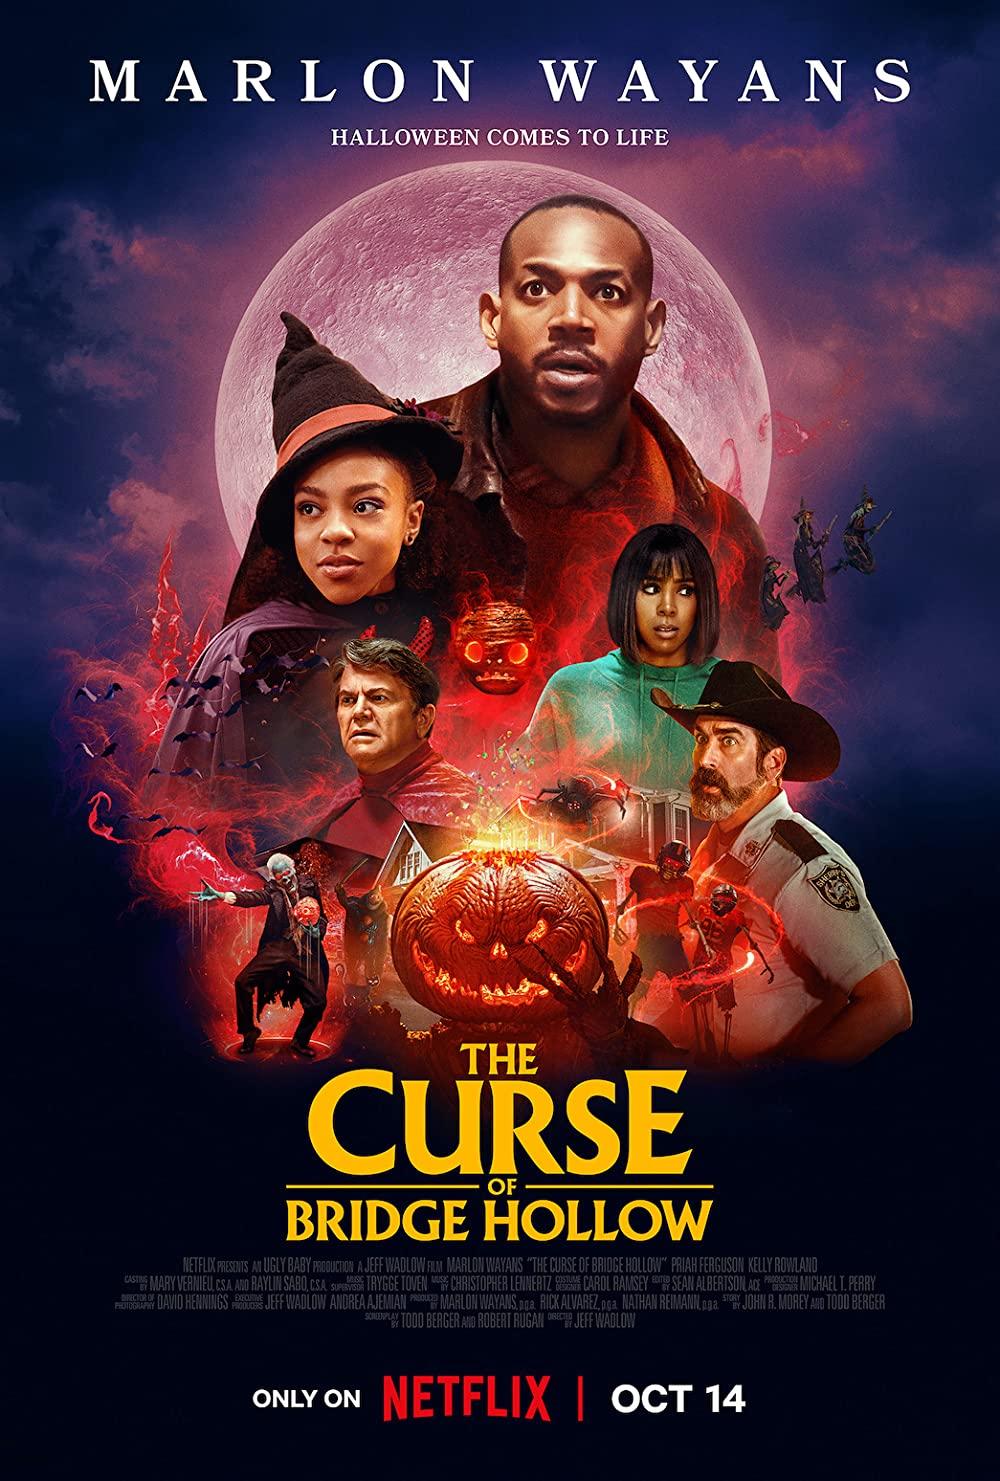 Poster của phim "The Curse of Bridge Hollow"